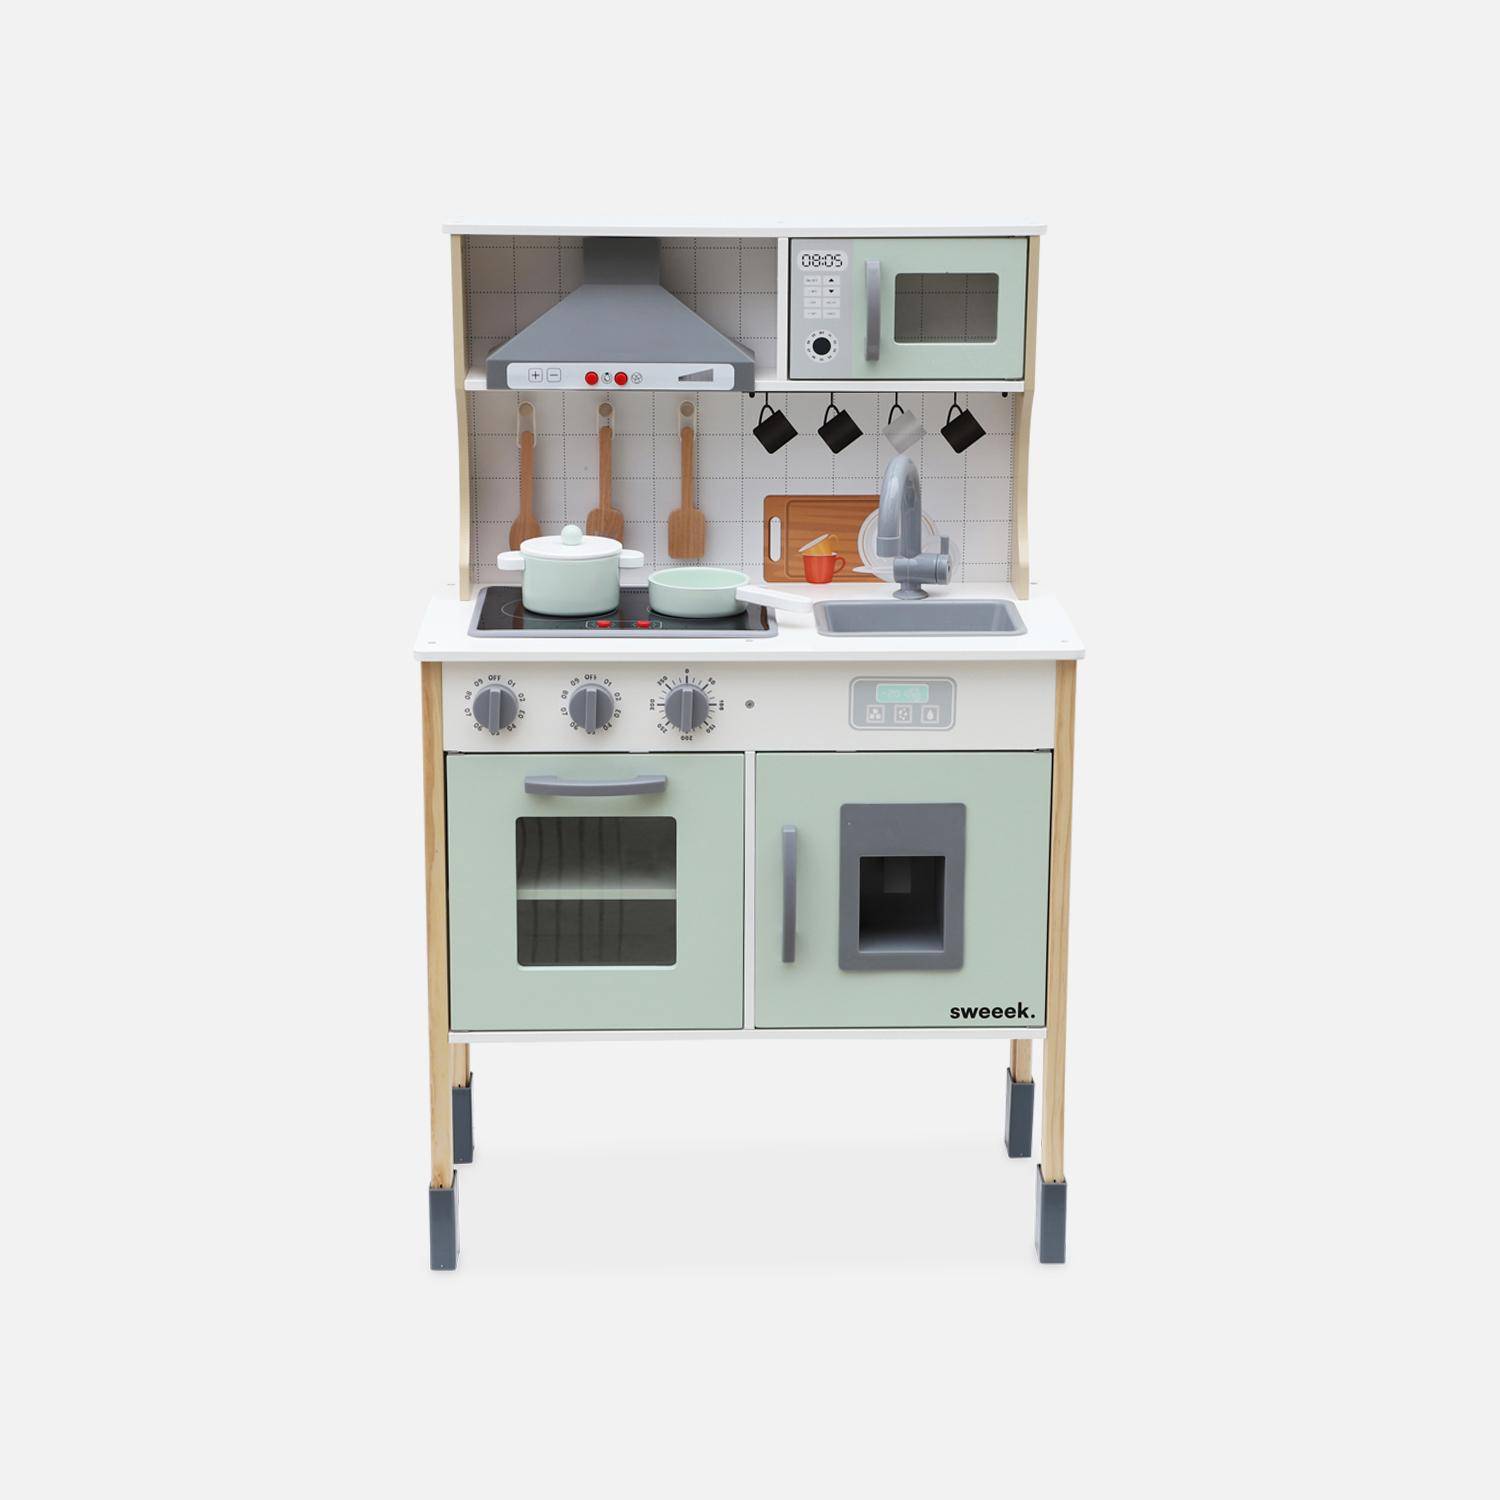 Panel de cocina infantil, accesorios incluidos, campana, placa de cocción, microondas electrónico,sweeek,Photo6